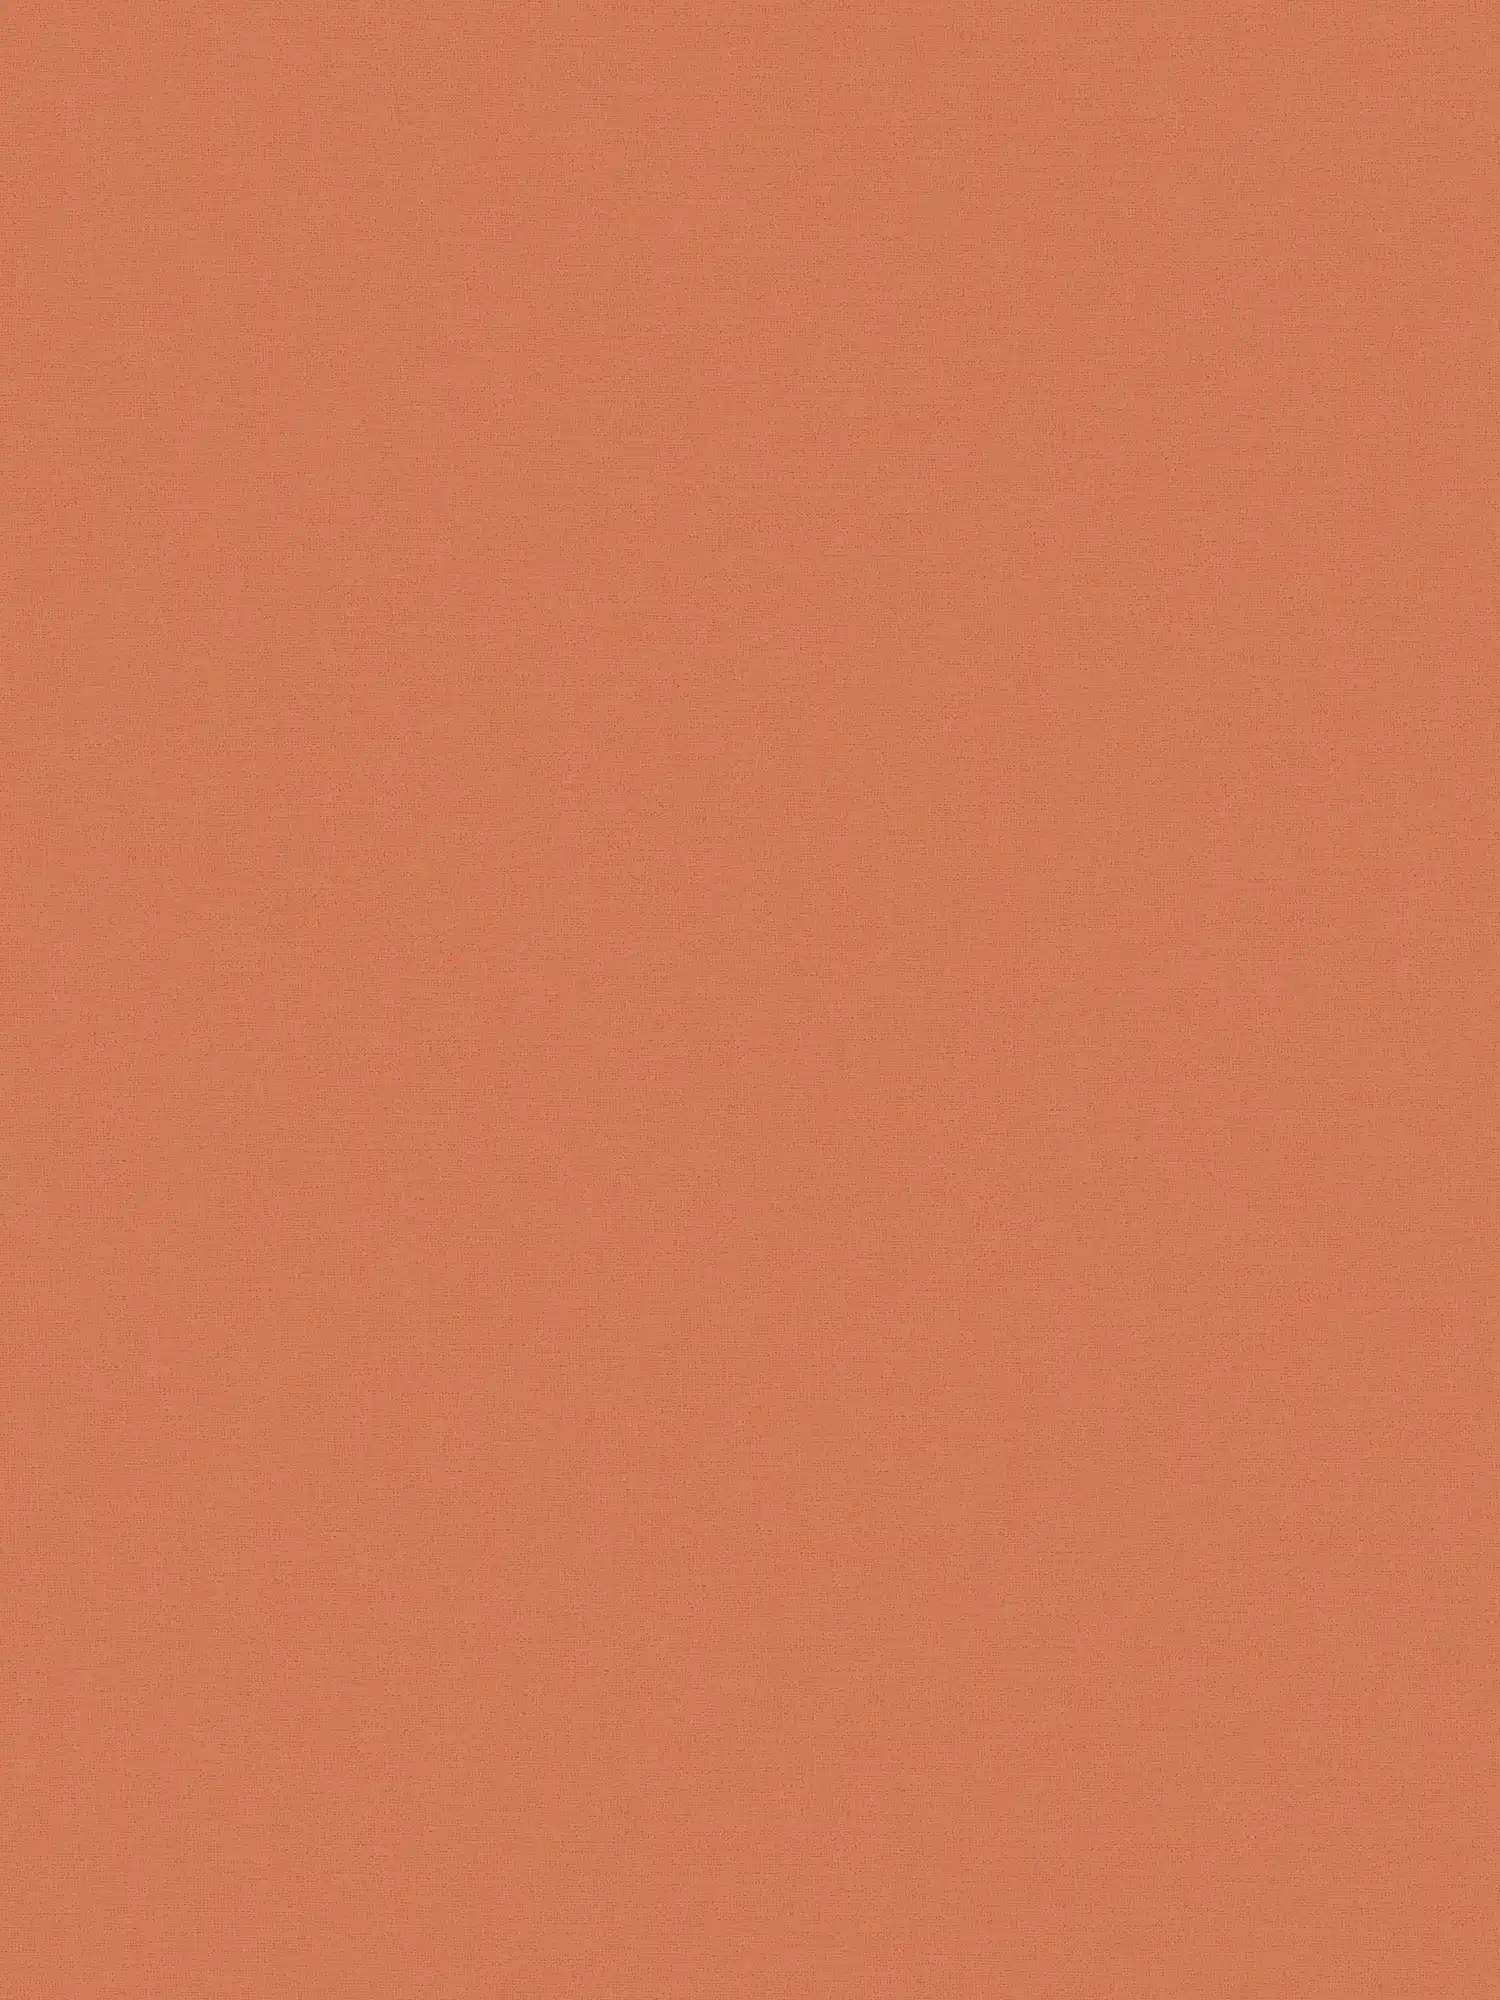 Plain wallpaper orange, plain & matte from MICHALSKY
